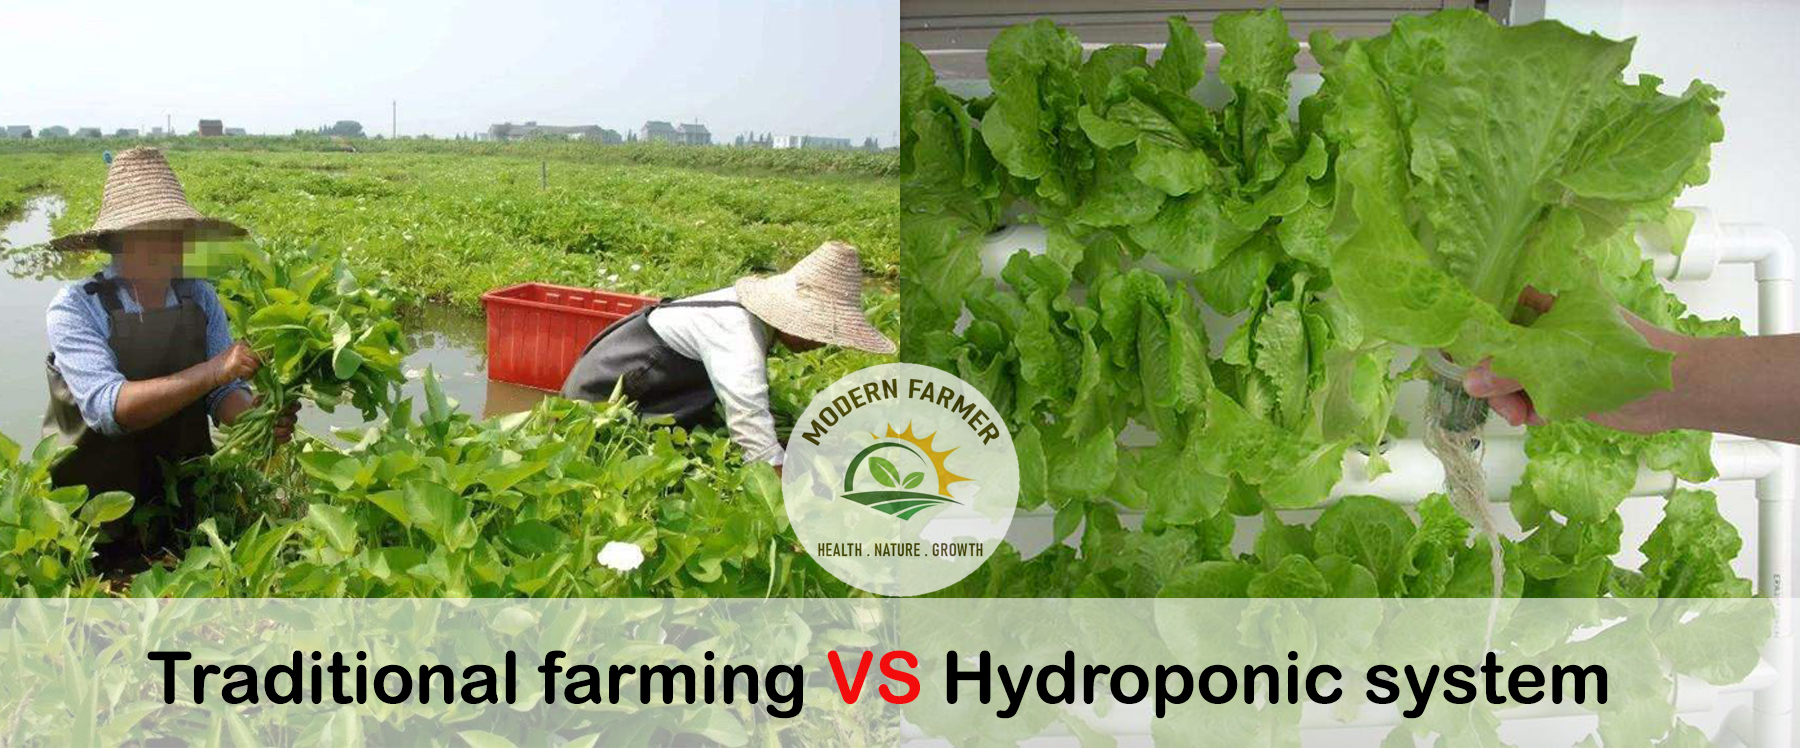 Hydroponics vs. Traditional Farming